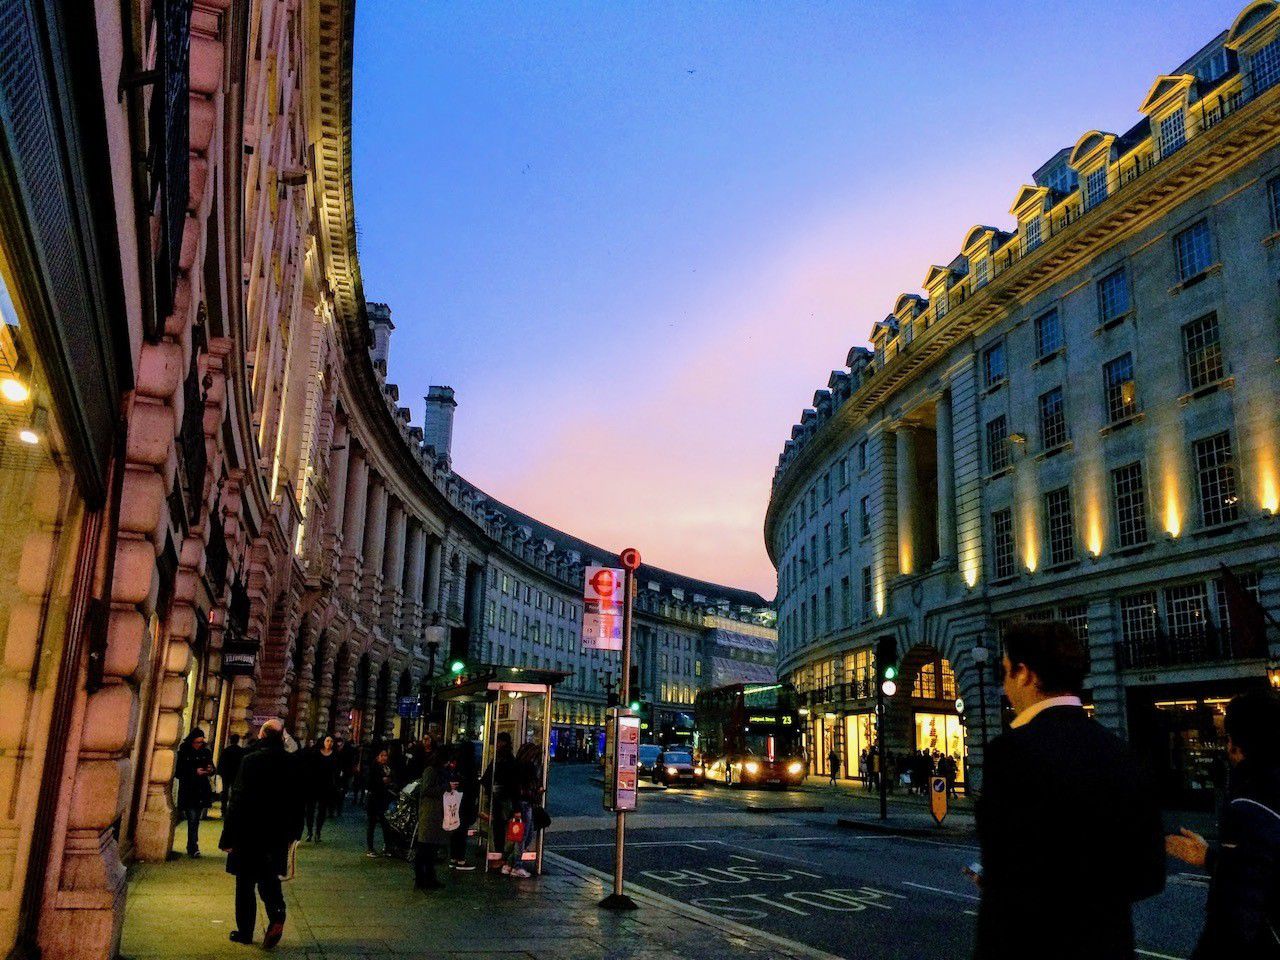 Regents Street at dusk London